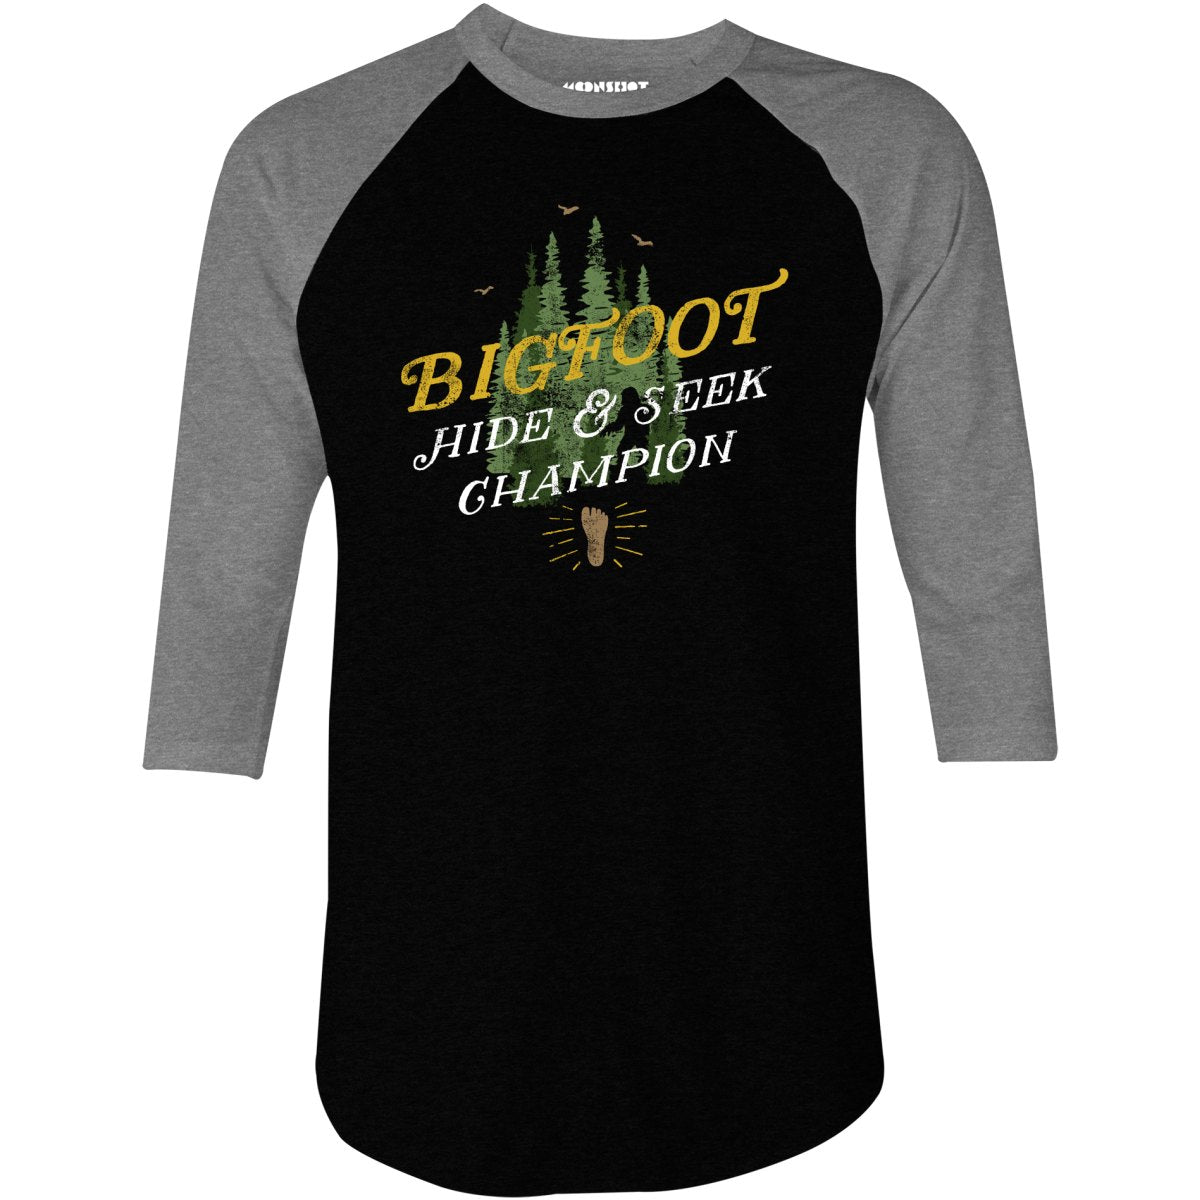 Bigfoot Hide & Seek Champion - 3/4 Sleeve Raglan T-Shirt